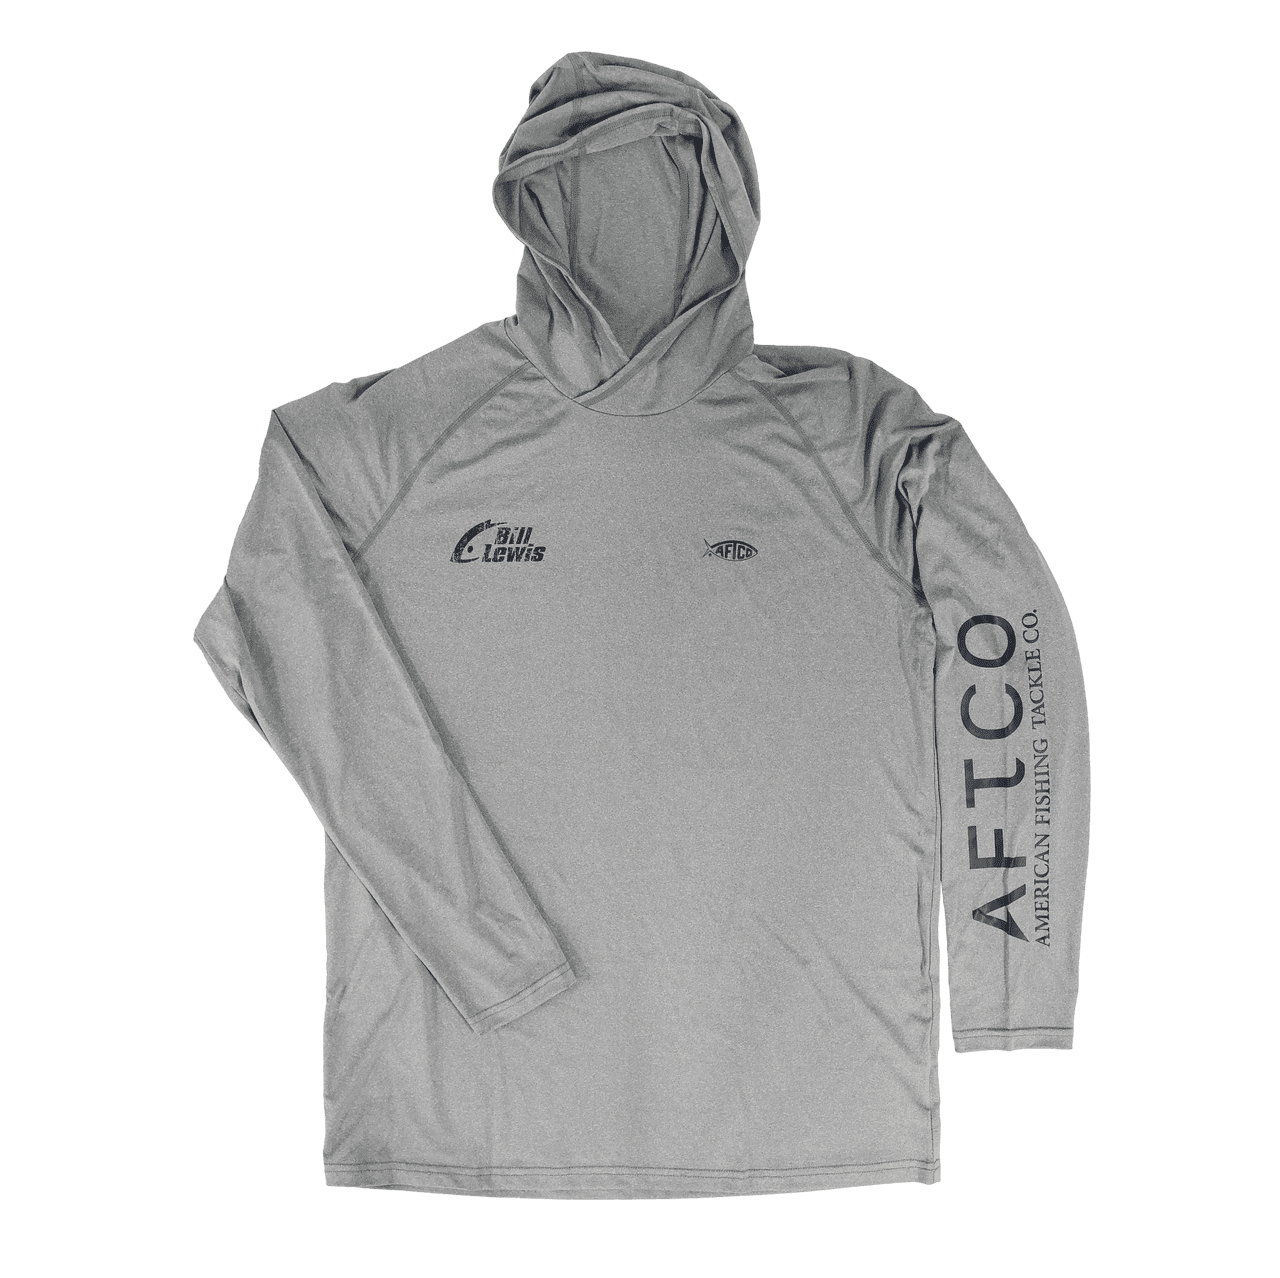 Bill Lewis Steel Charcoal Hooded Fishing Shirt - Apparel - Bill Lewis